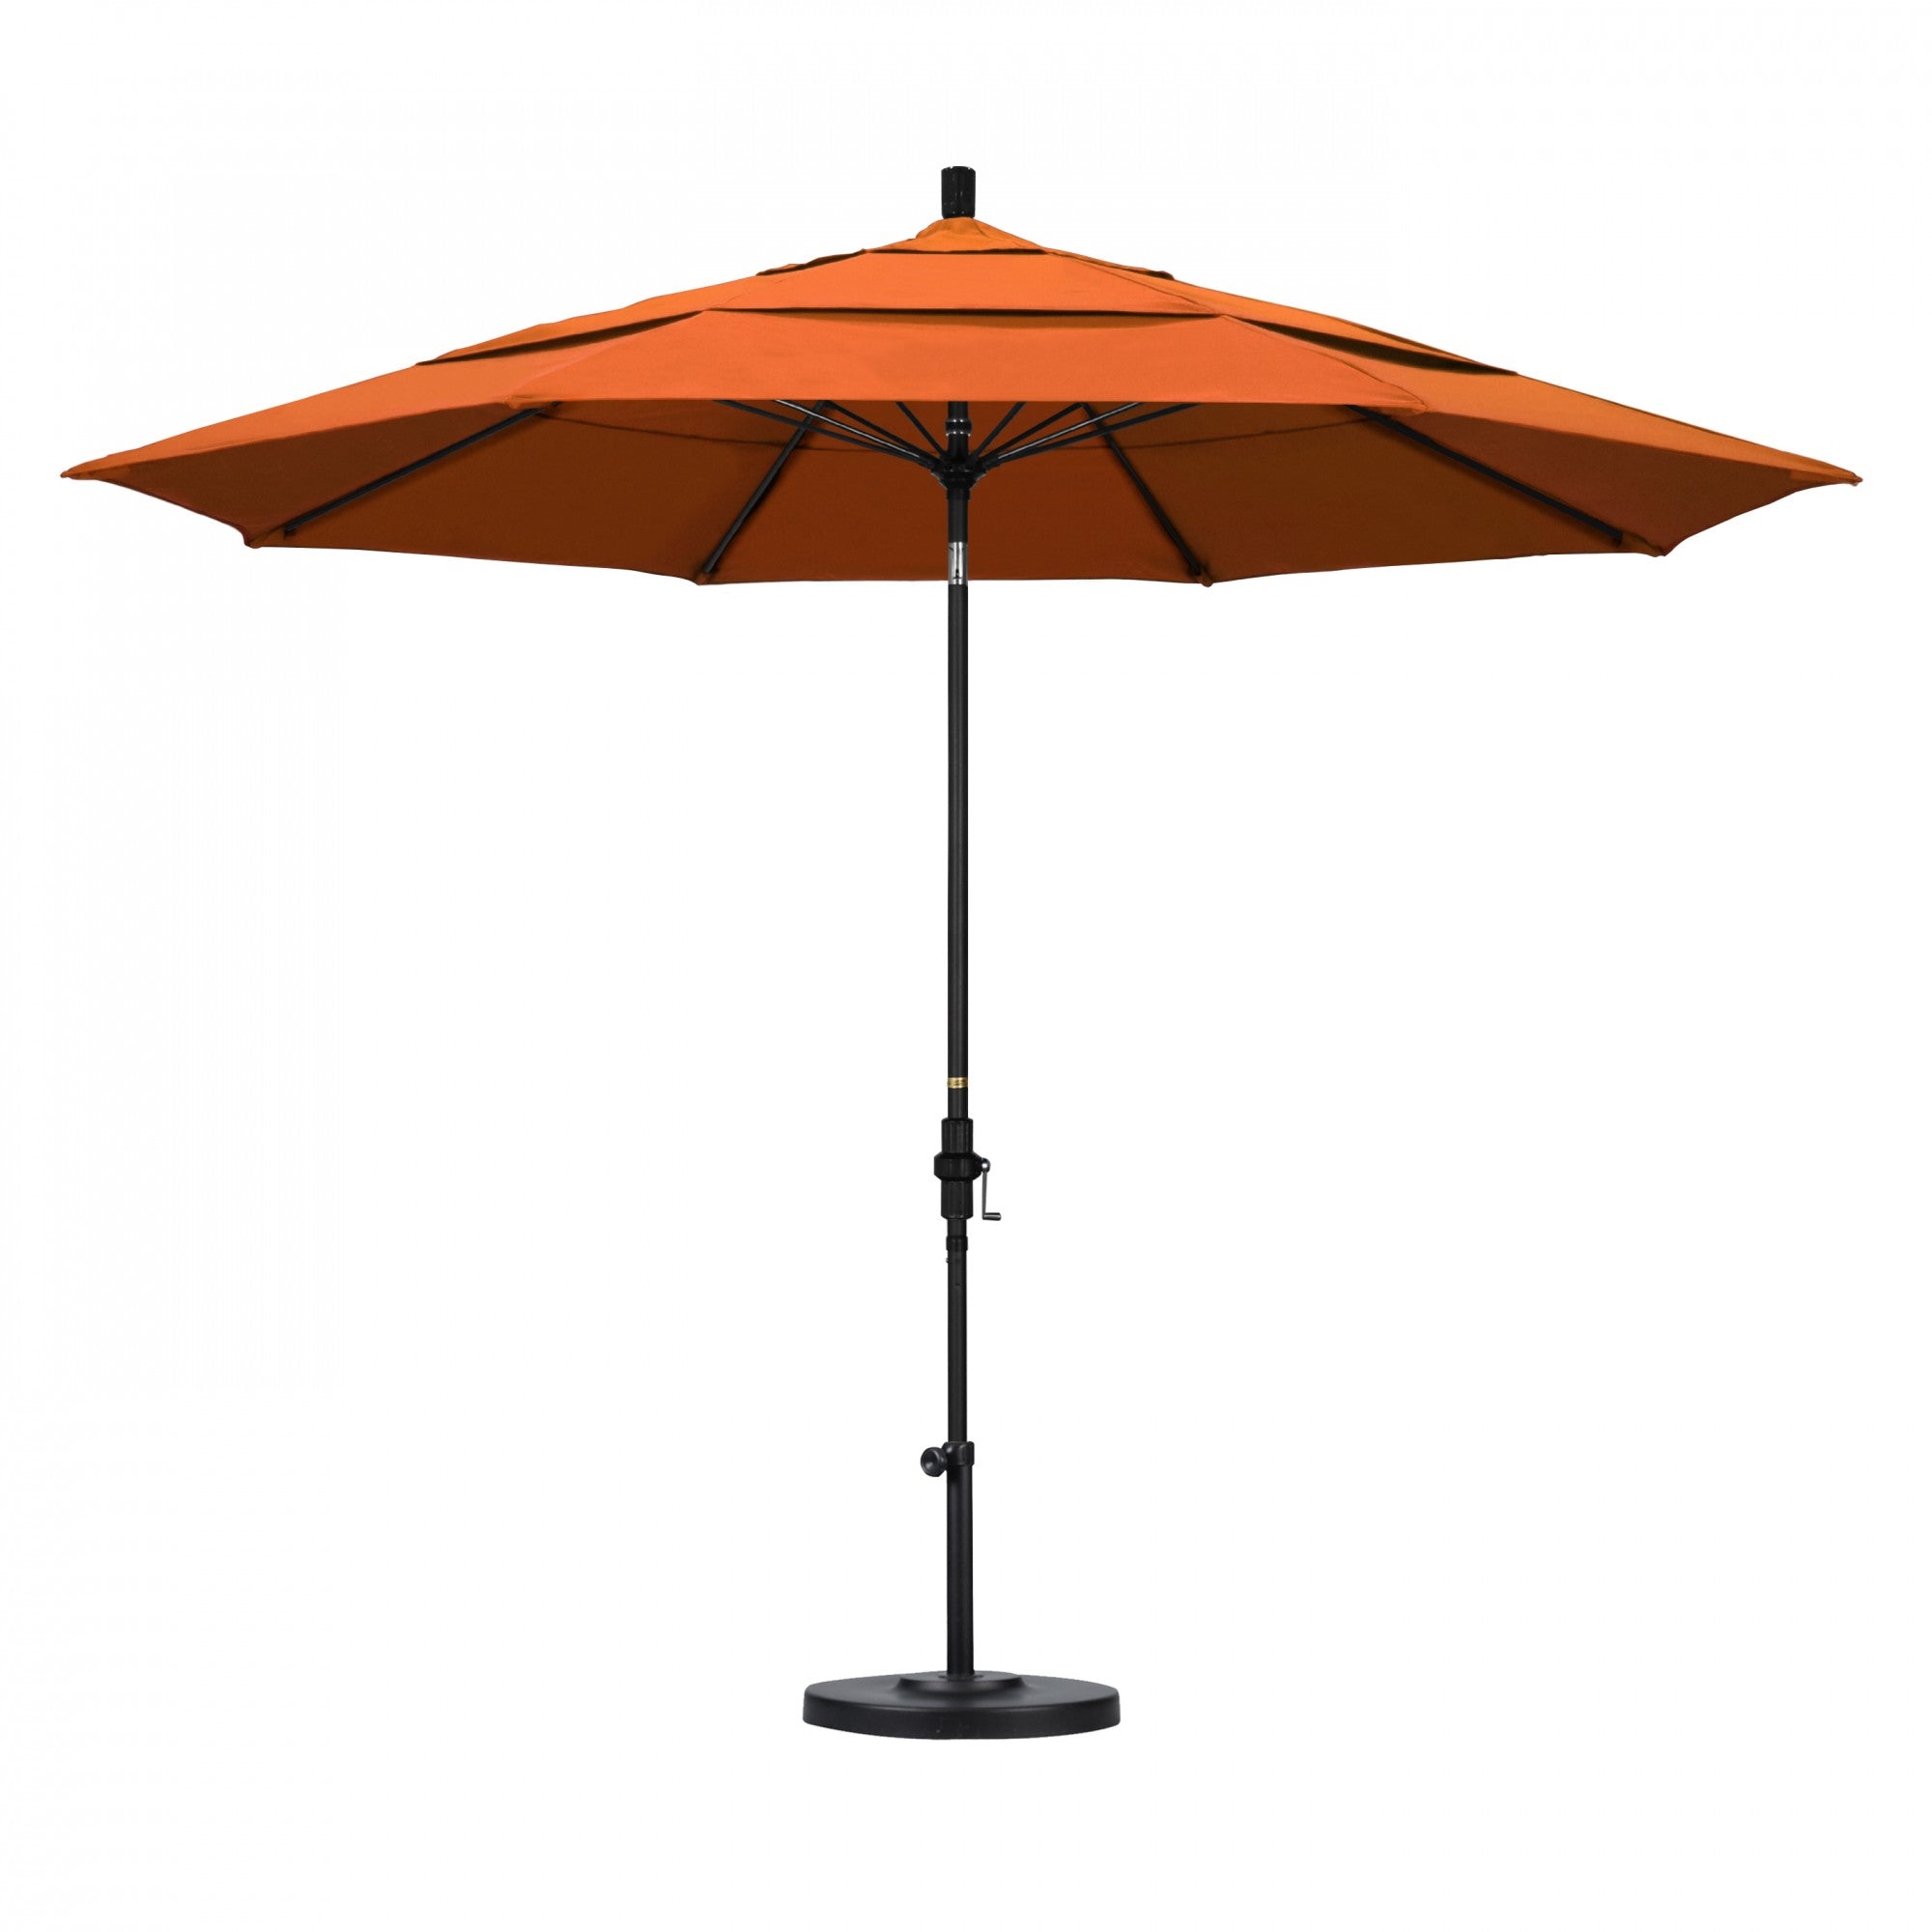 California Umbrella - 11' - Patio Umbrella Umbrella - Aluminum Pole - Tuscan - Sunbrella  - GSCUF118705-5417-DWV